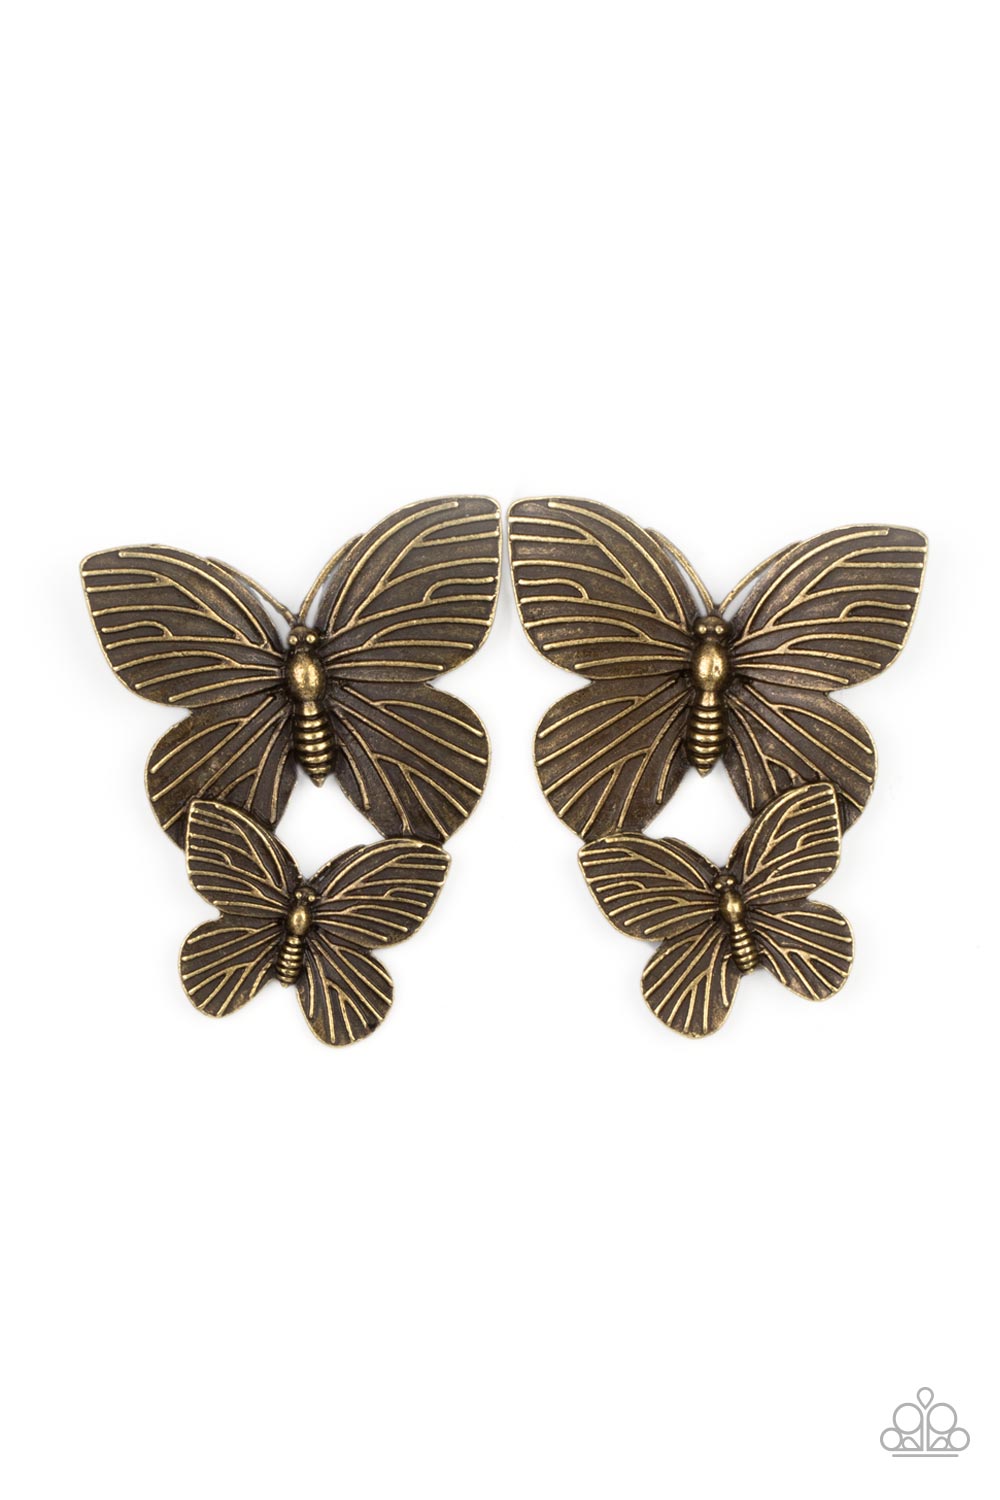 Blushing Butterflies - Brass Earrings - Princess Glam Shop